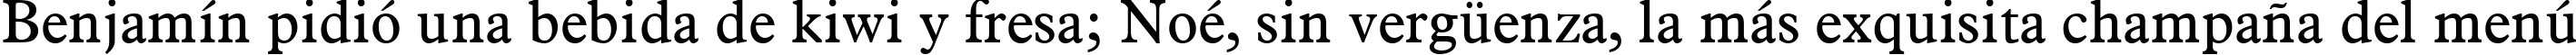 Пример написания шрифтом Aldine 721 BT текста на испанском